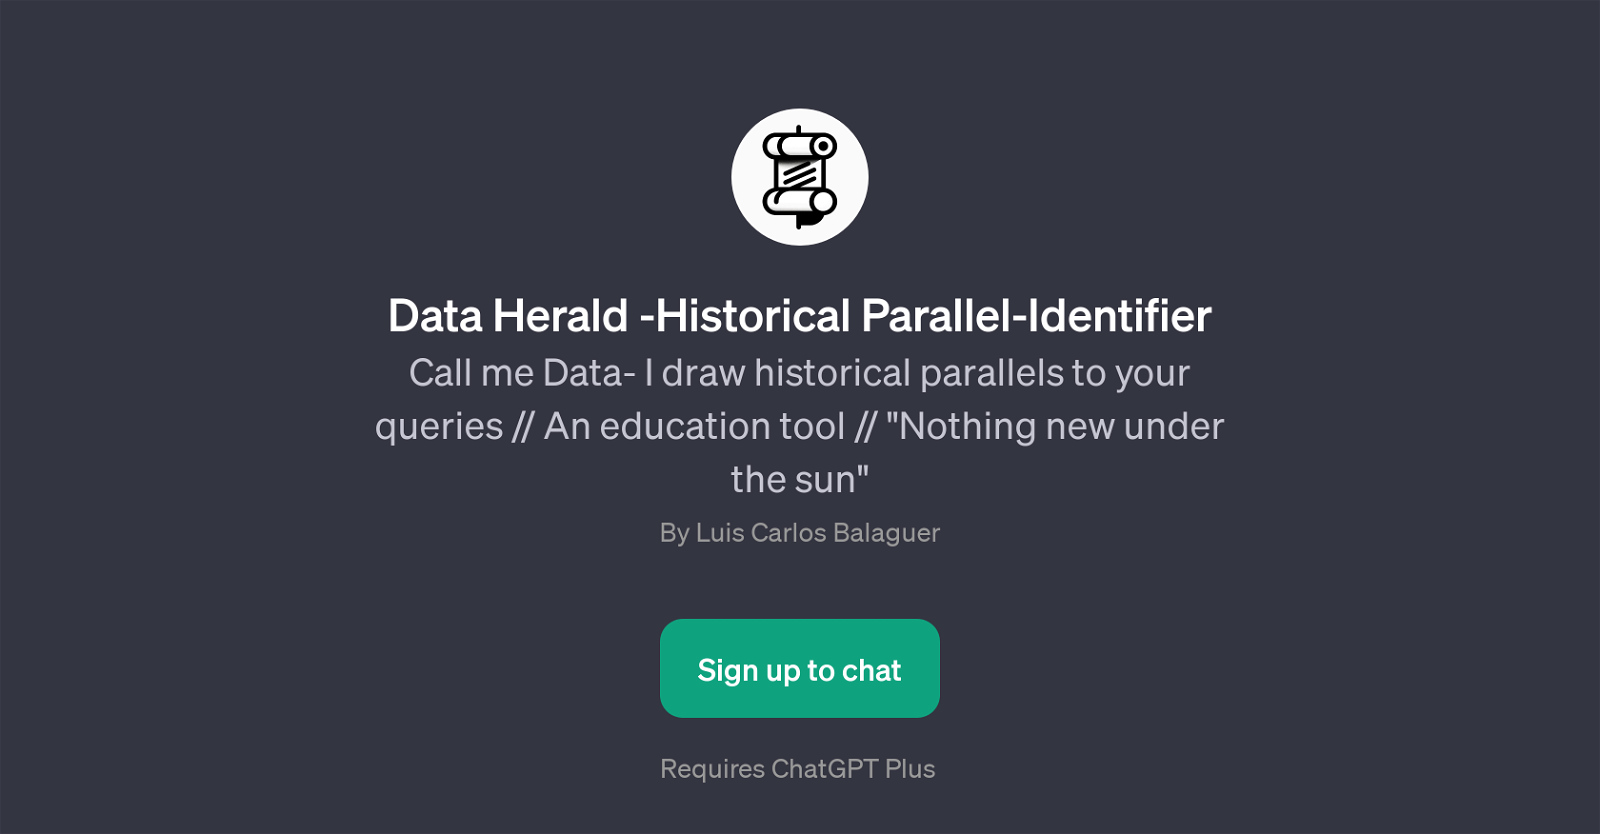 Data Herald - Historical Parallel-Identifier website